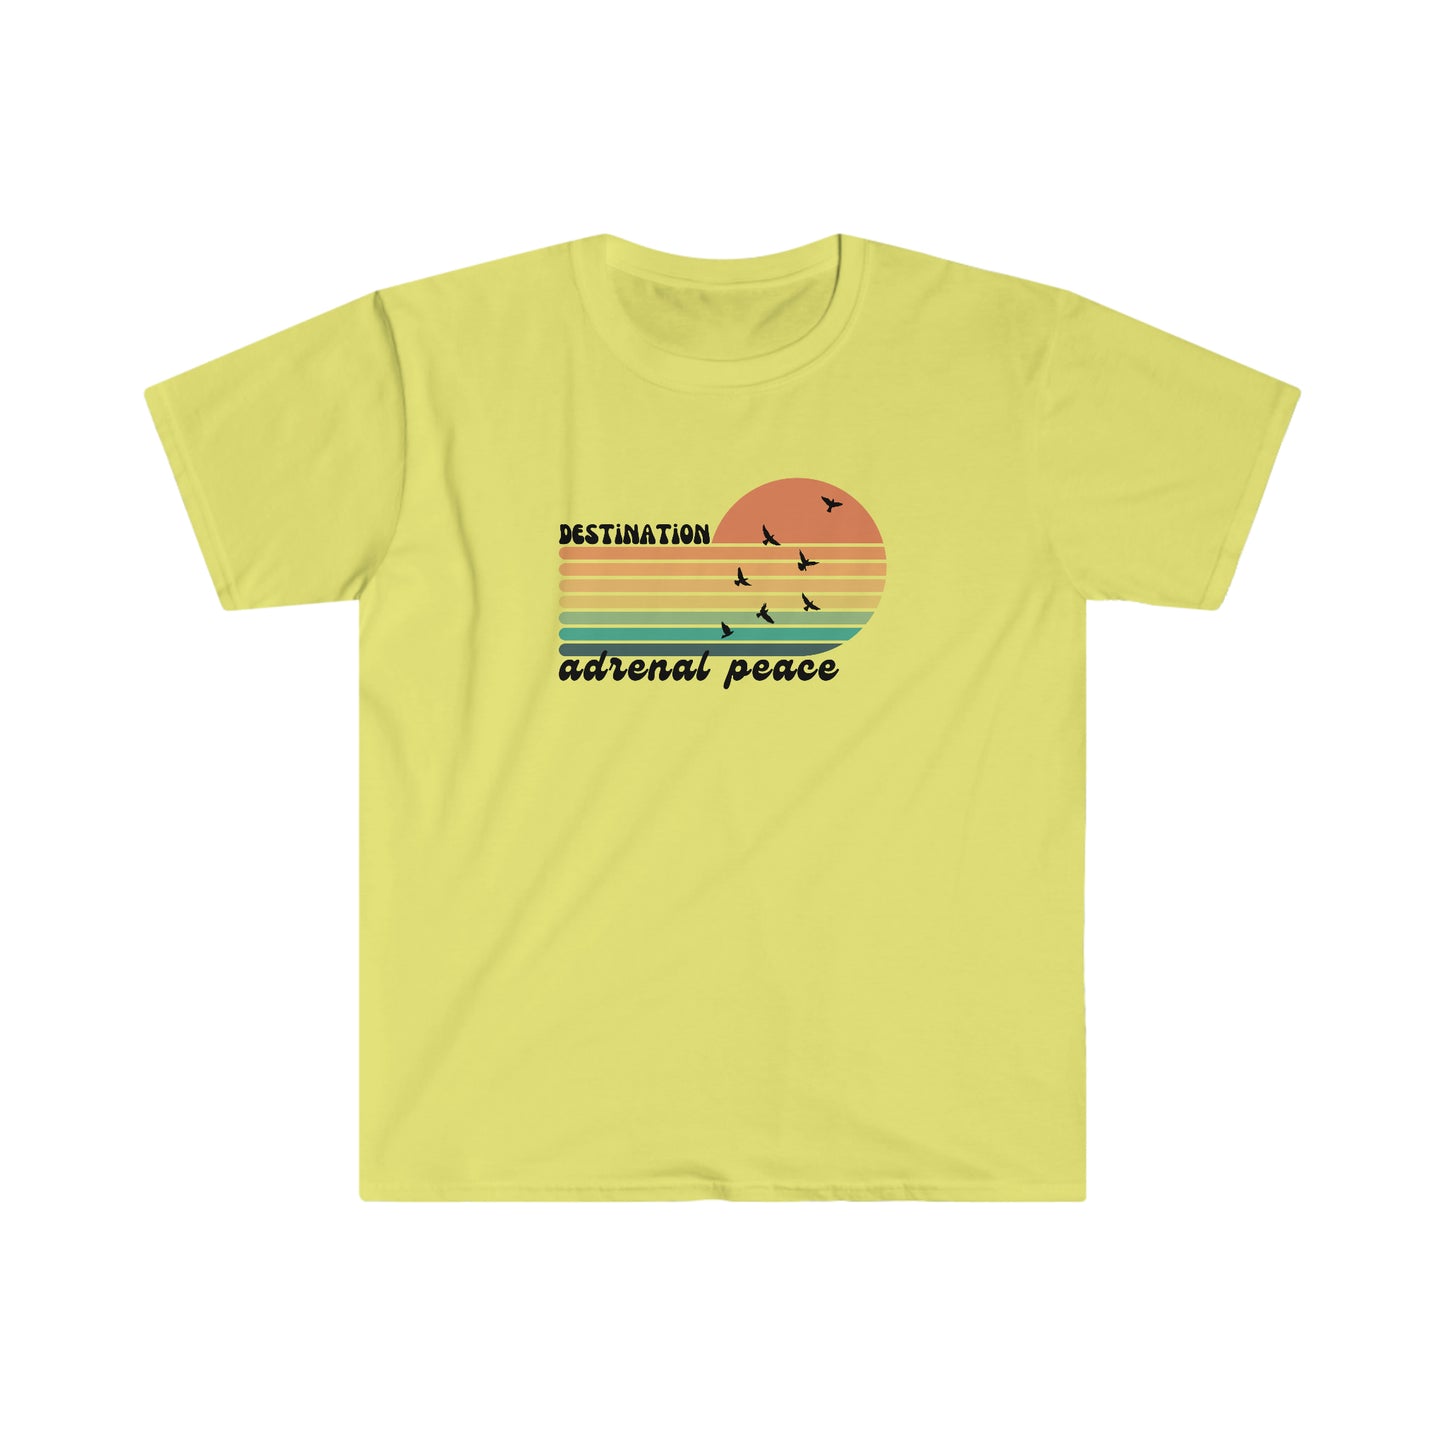 Destination: Adrenal Peace (retro rainbow) Unisex Softstyle T-Shirt